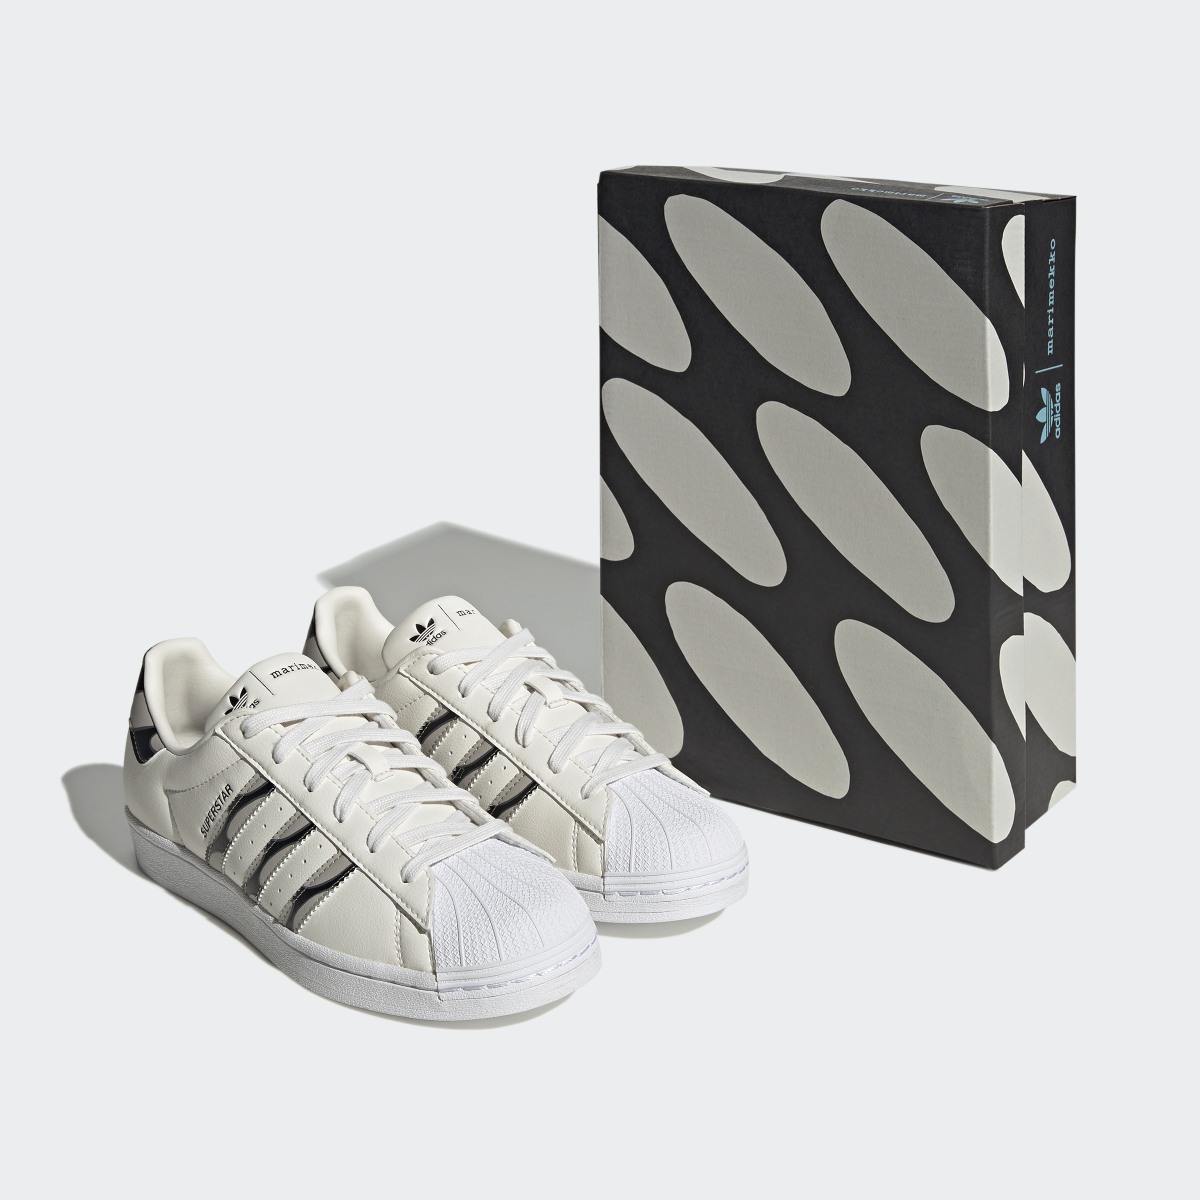 Adidas Scarpe adidas x Marimekko Superstar. 10